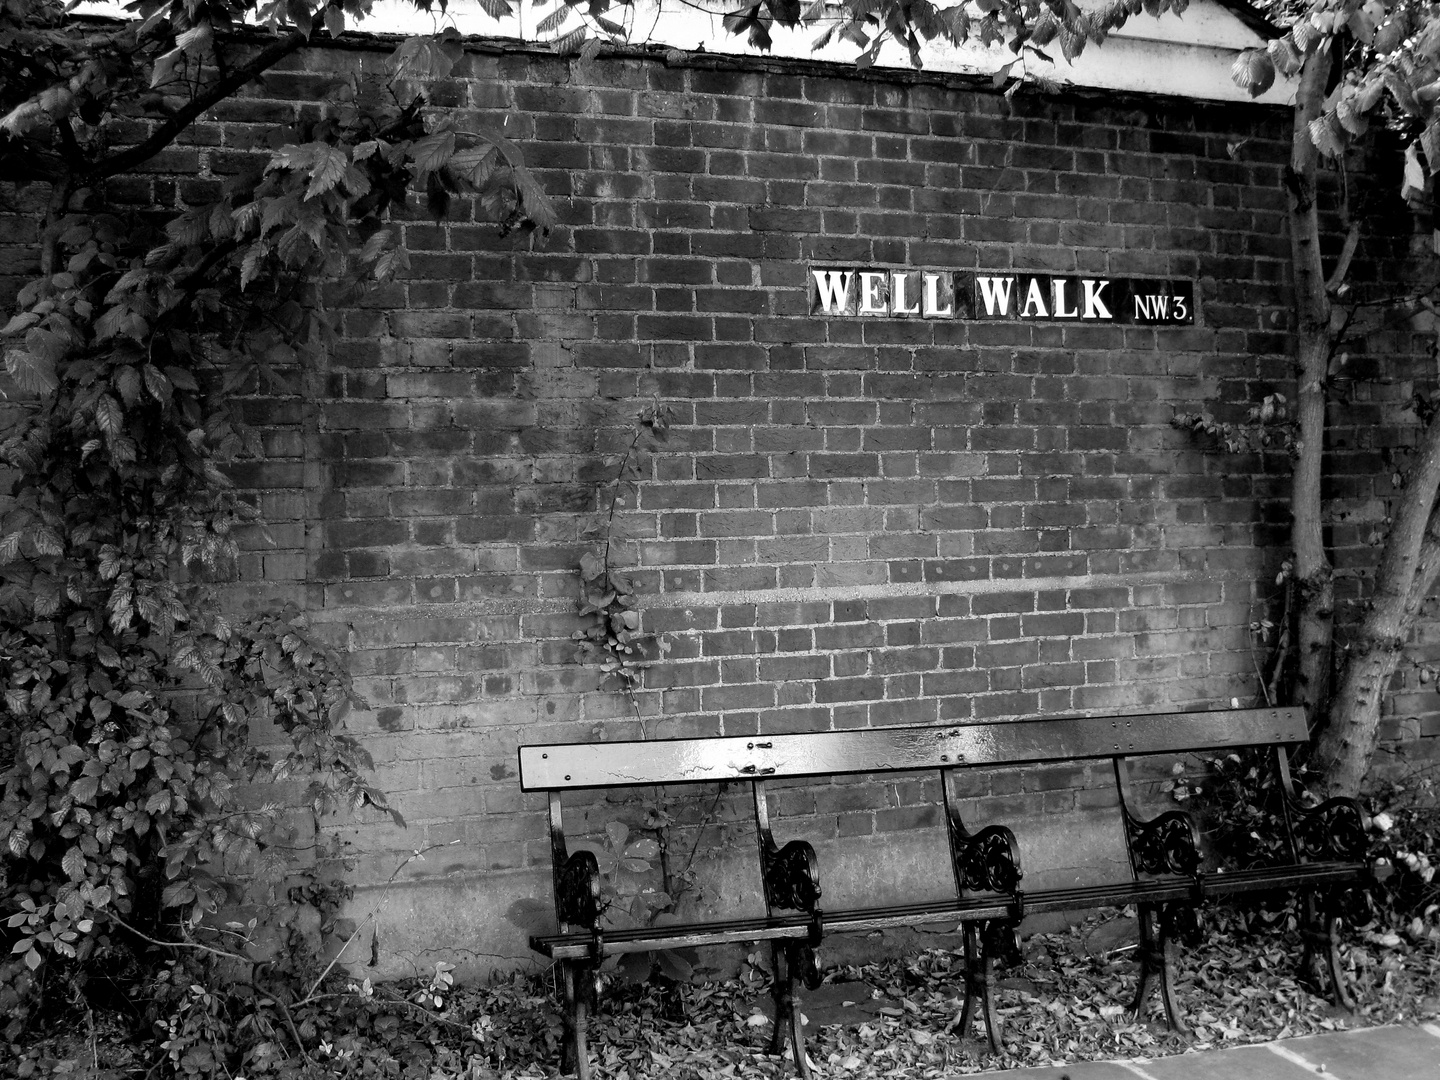 The Well Walk